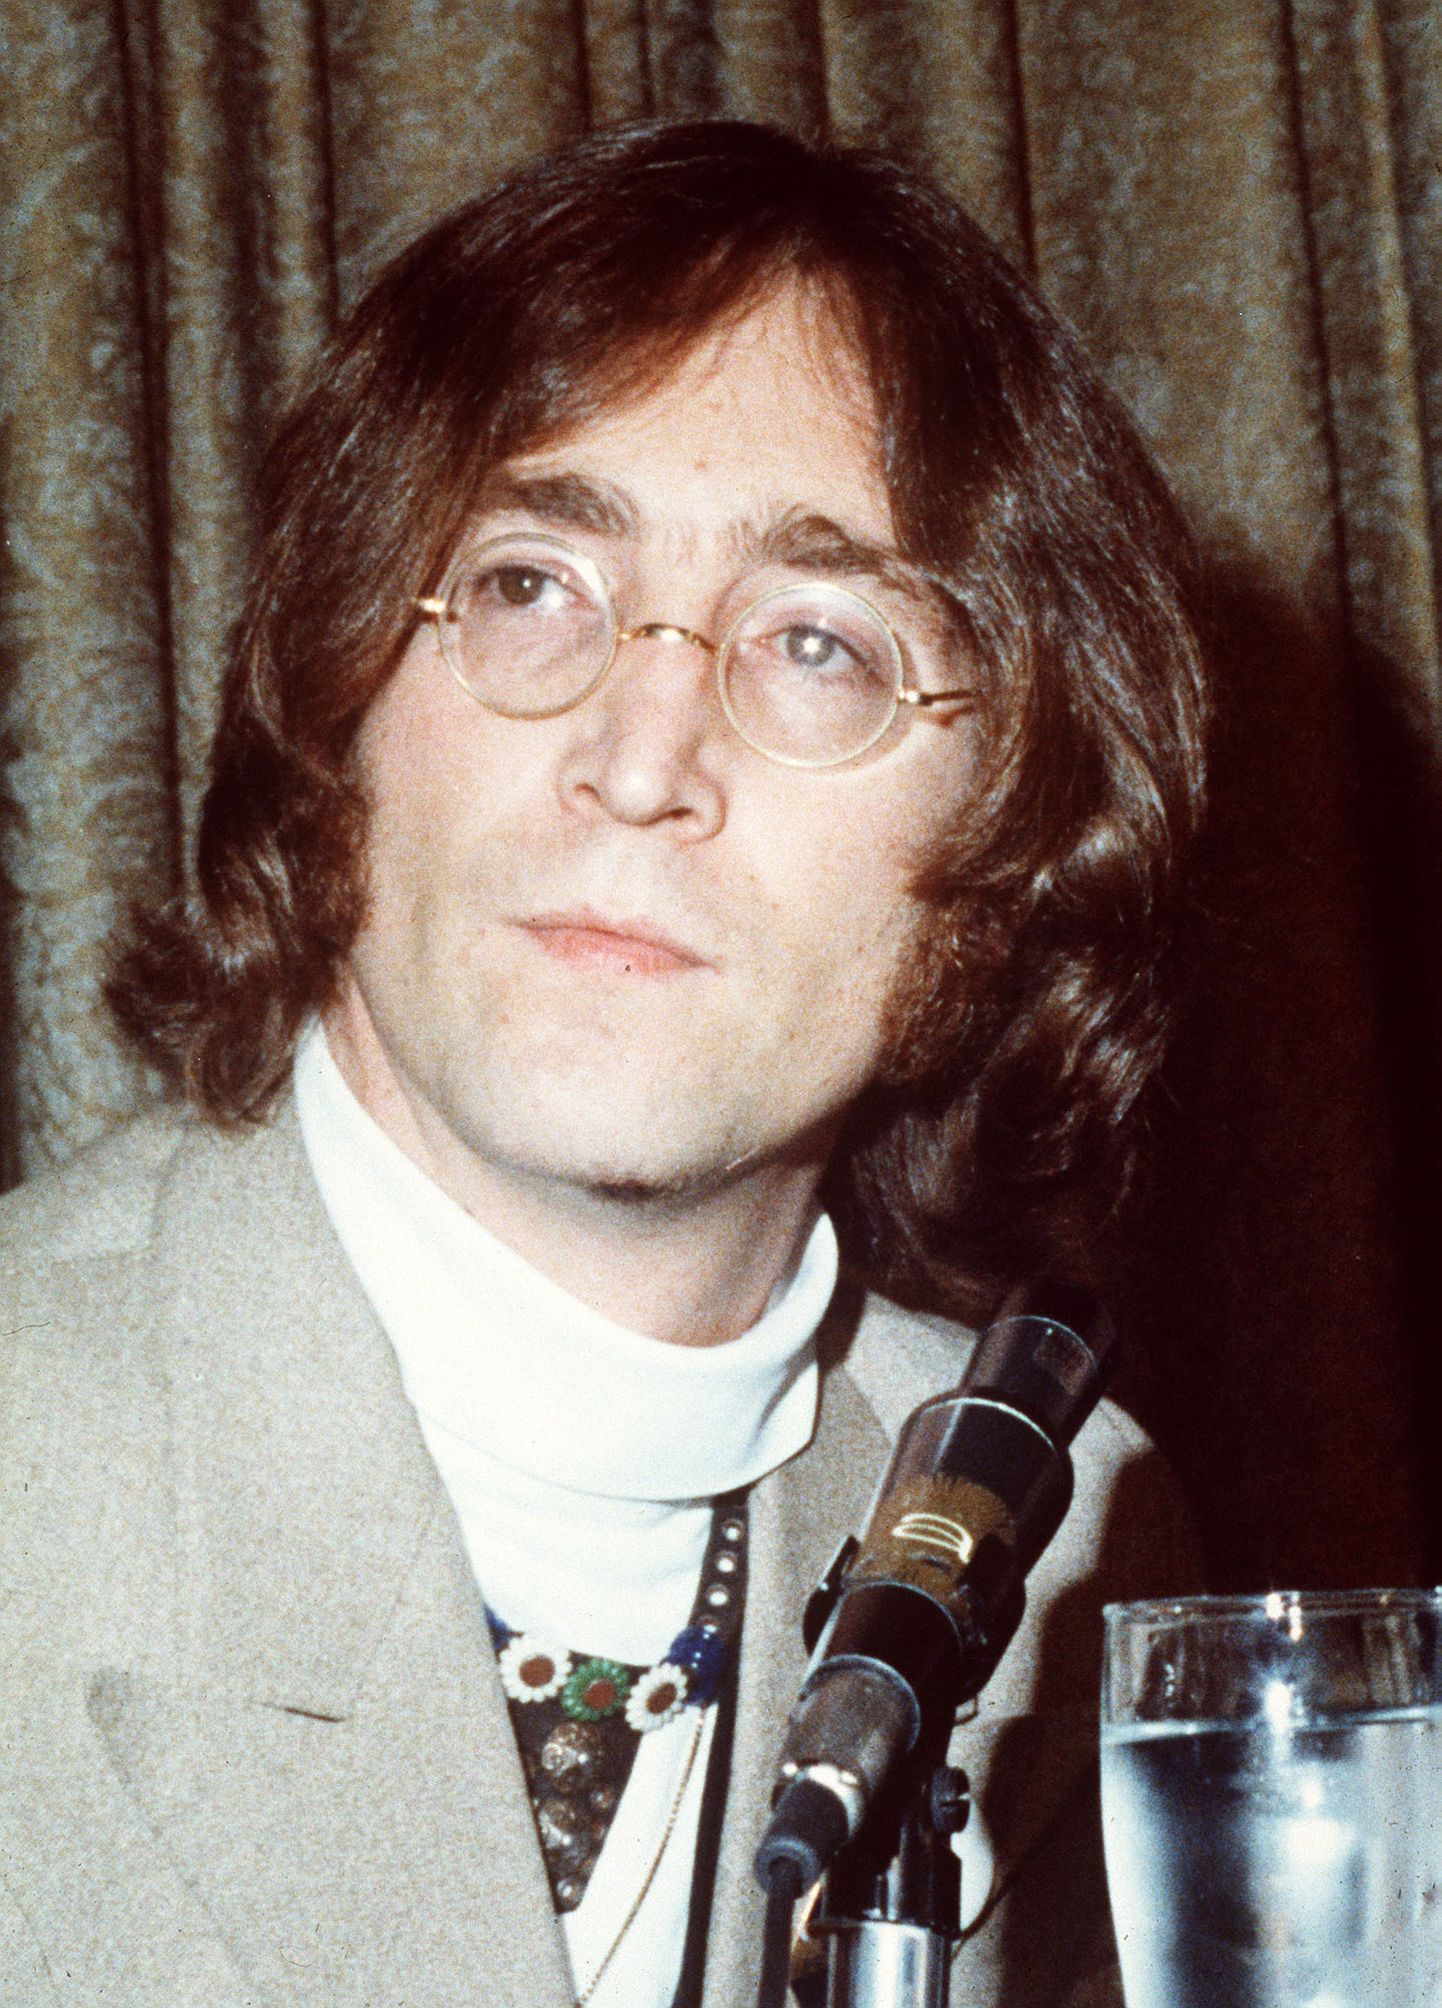 ** FILE ** This undated file photo shows John Lennon.  (AP Photo, file) / SCANPIX Code: 436